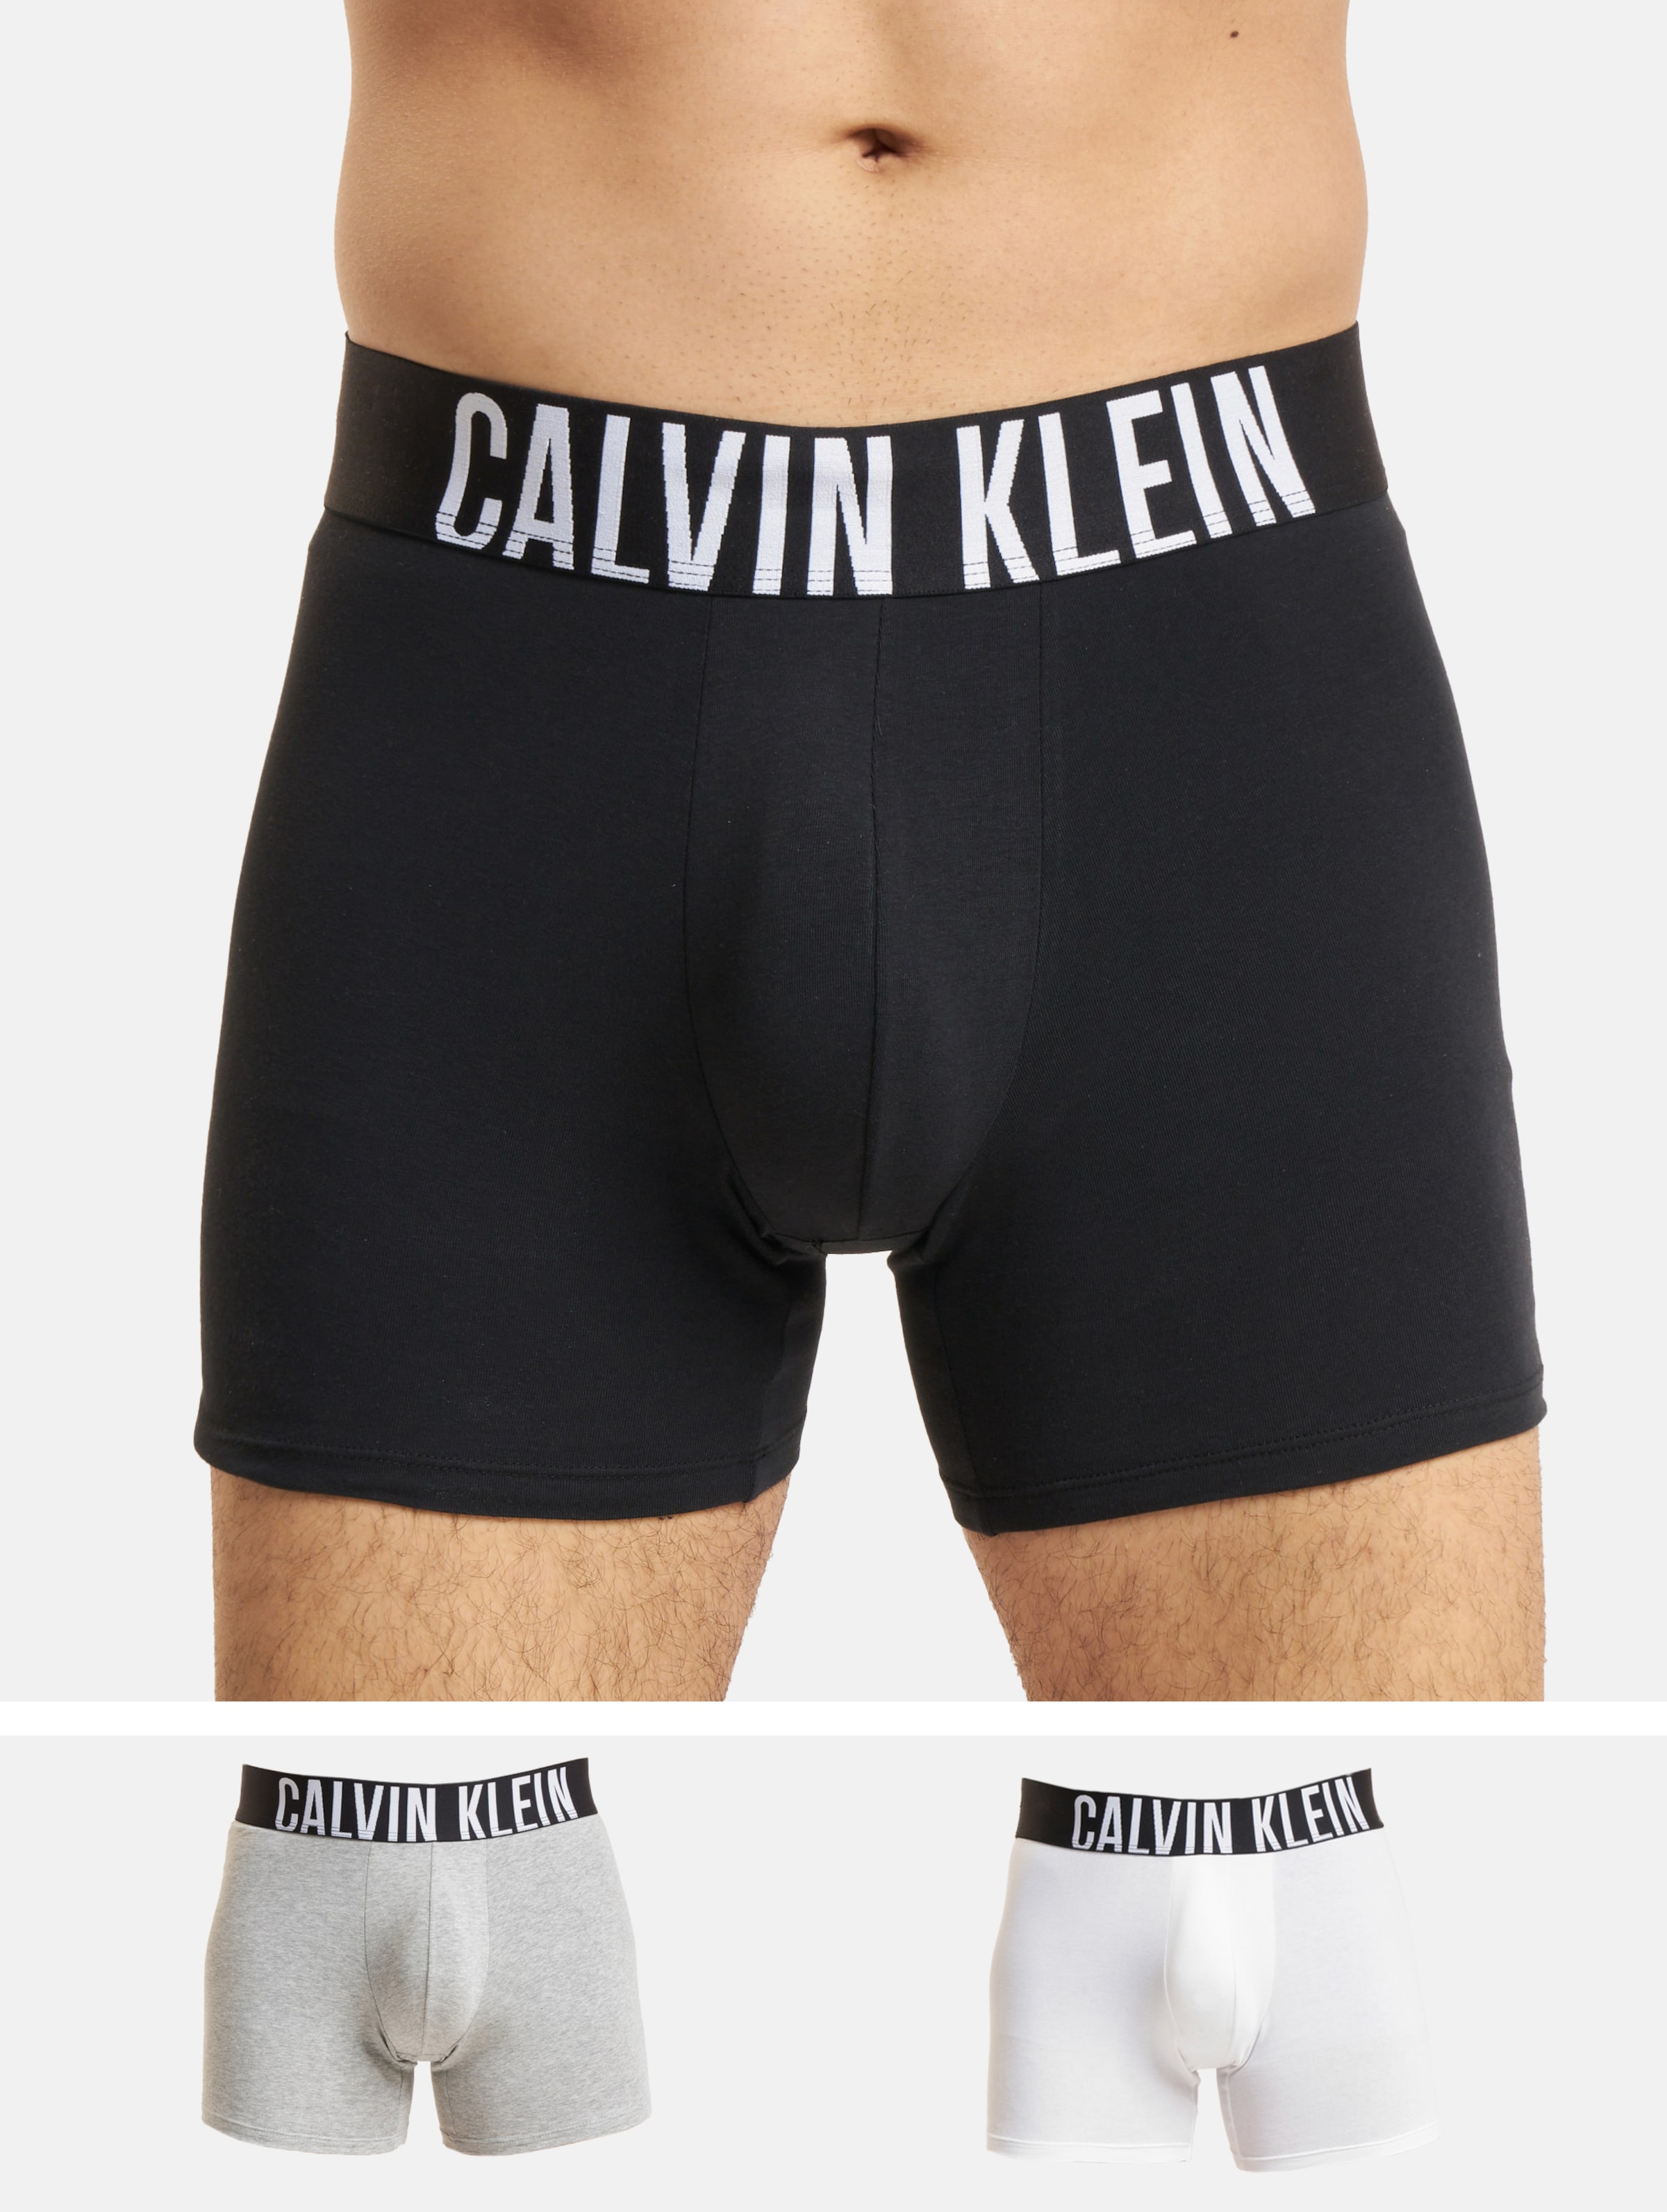 Calvin Klein Brief 3 Pack Boxershorts Männer,Unisex op kleur grijs, Maat M